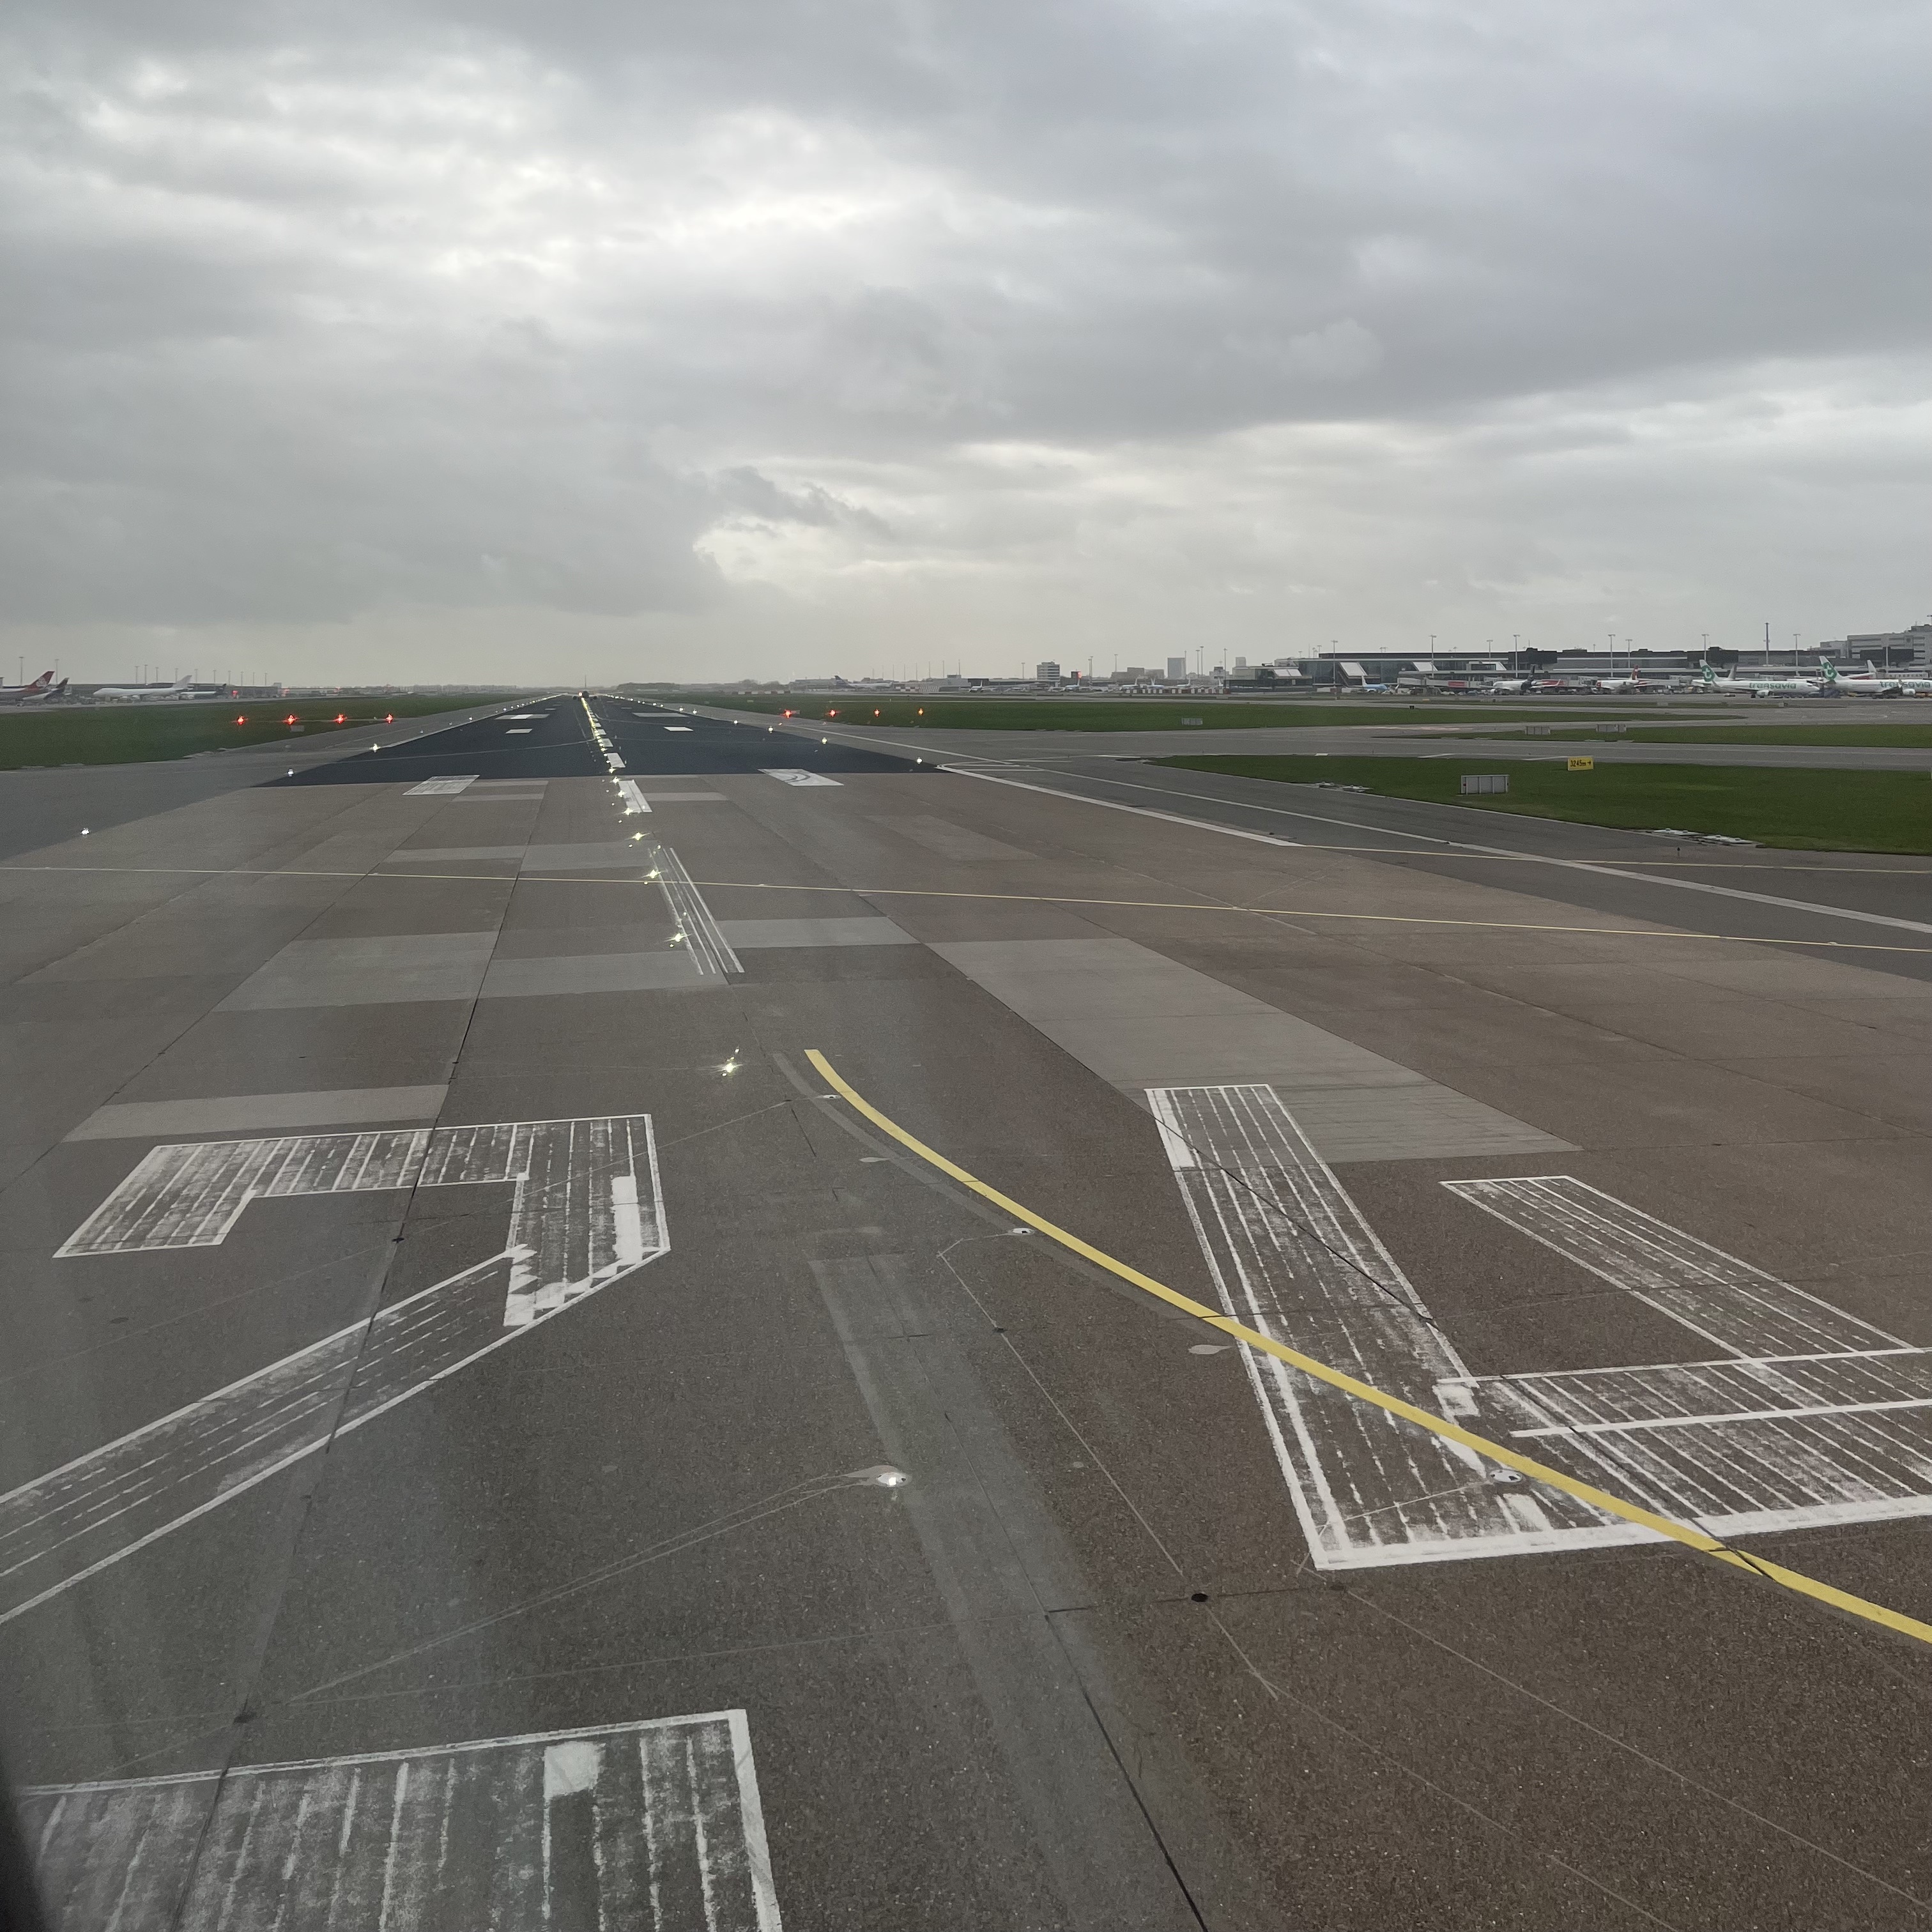 Runway 24 at Schiphol Airport. Amsterdam, Netherlands.